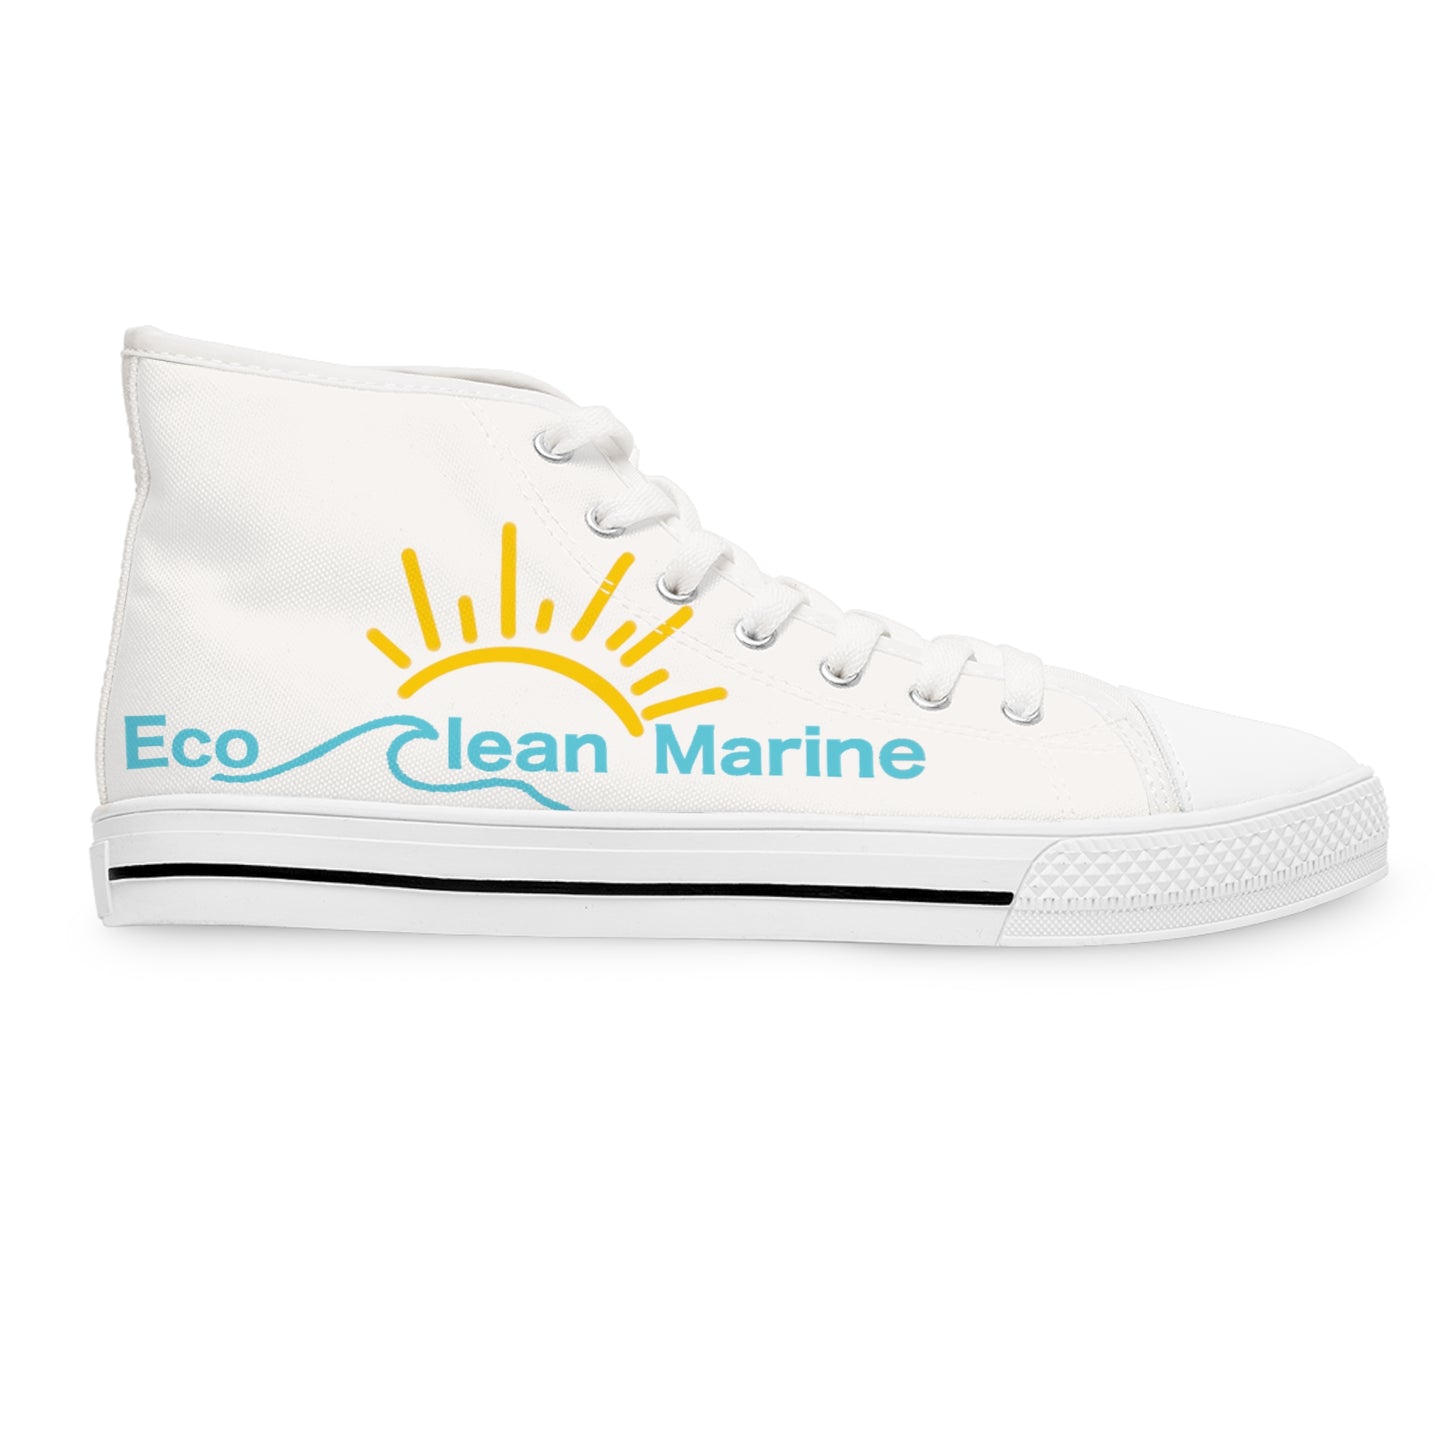 Eco Clean Marine High Top Sneakers